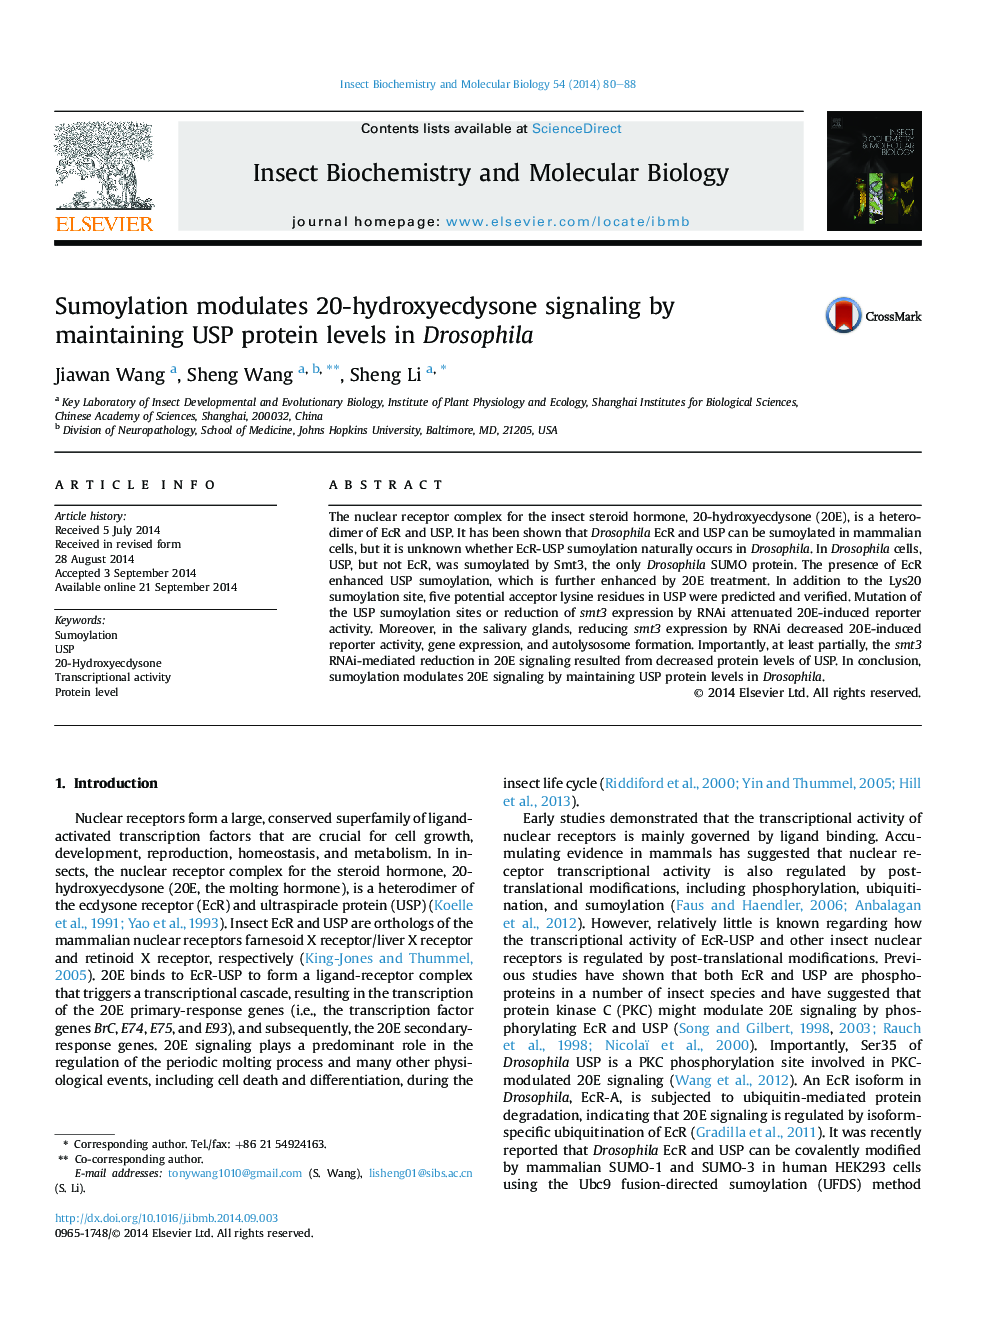 Sumoylation modulates 20-hydroxyecdysone signaling by maintaining USP protein levels in Drosophila